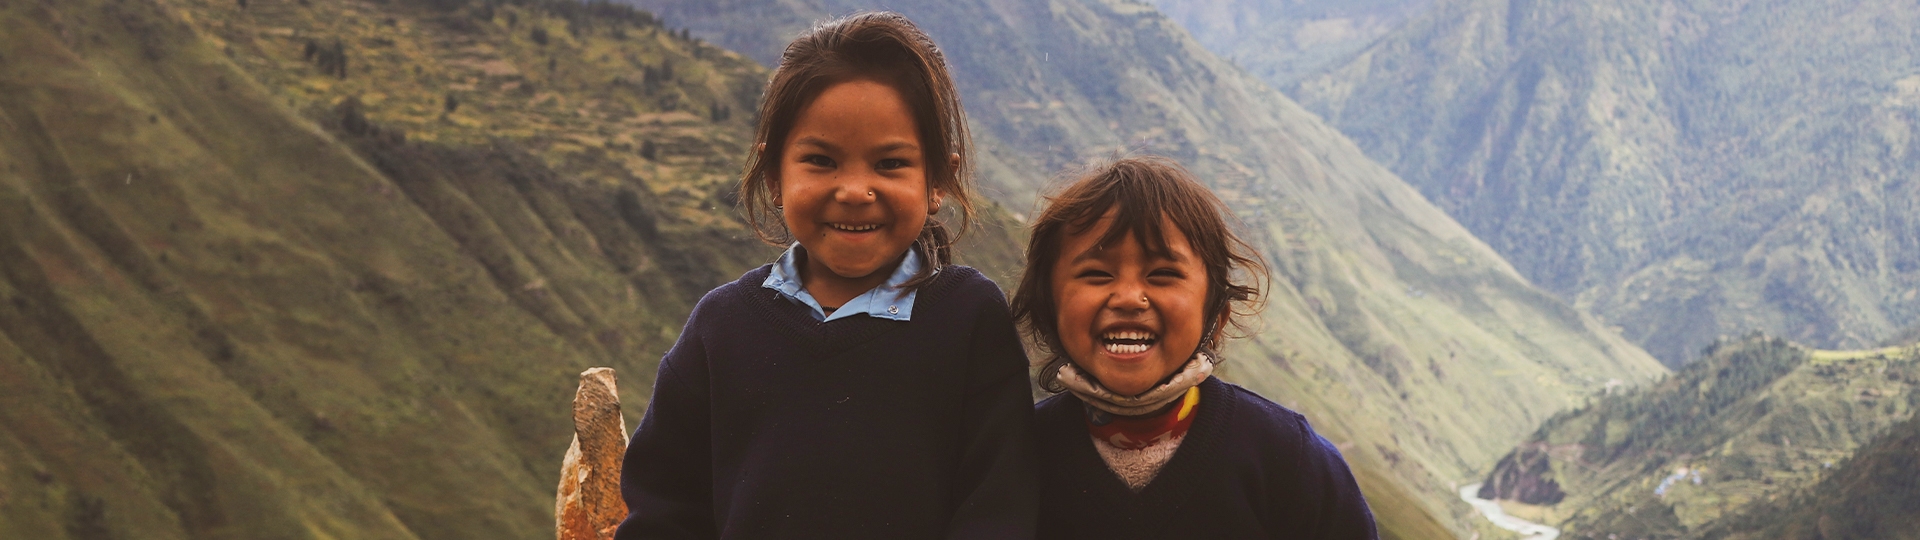 Western region of Nepal- Childrens of Humla